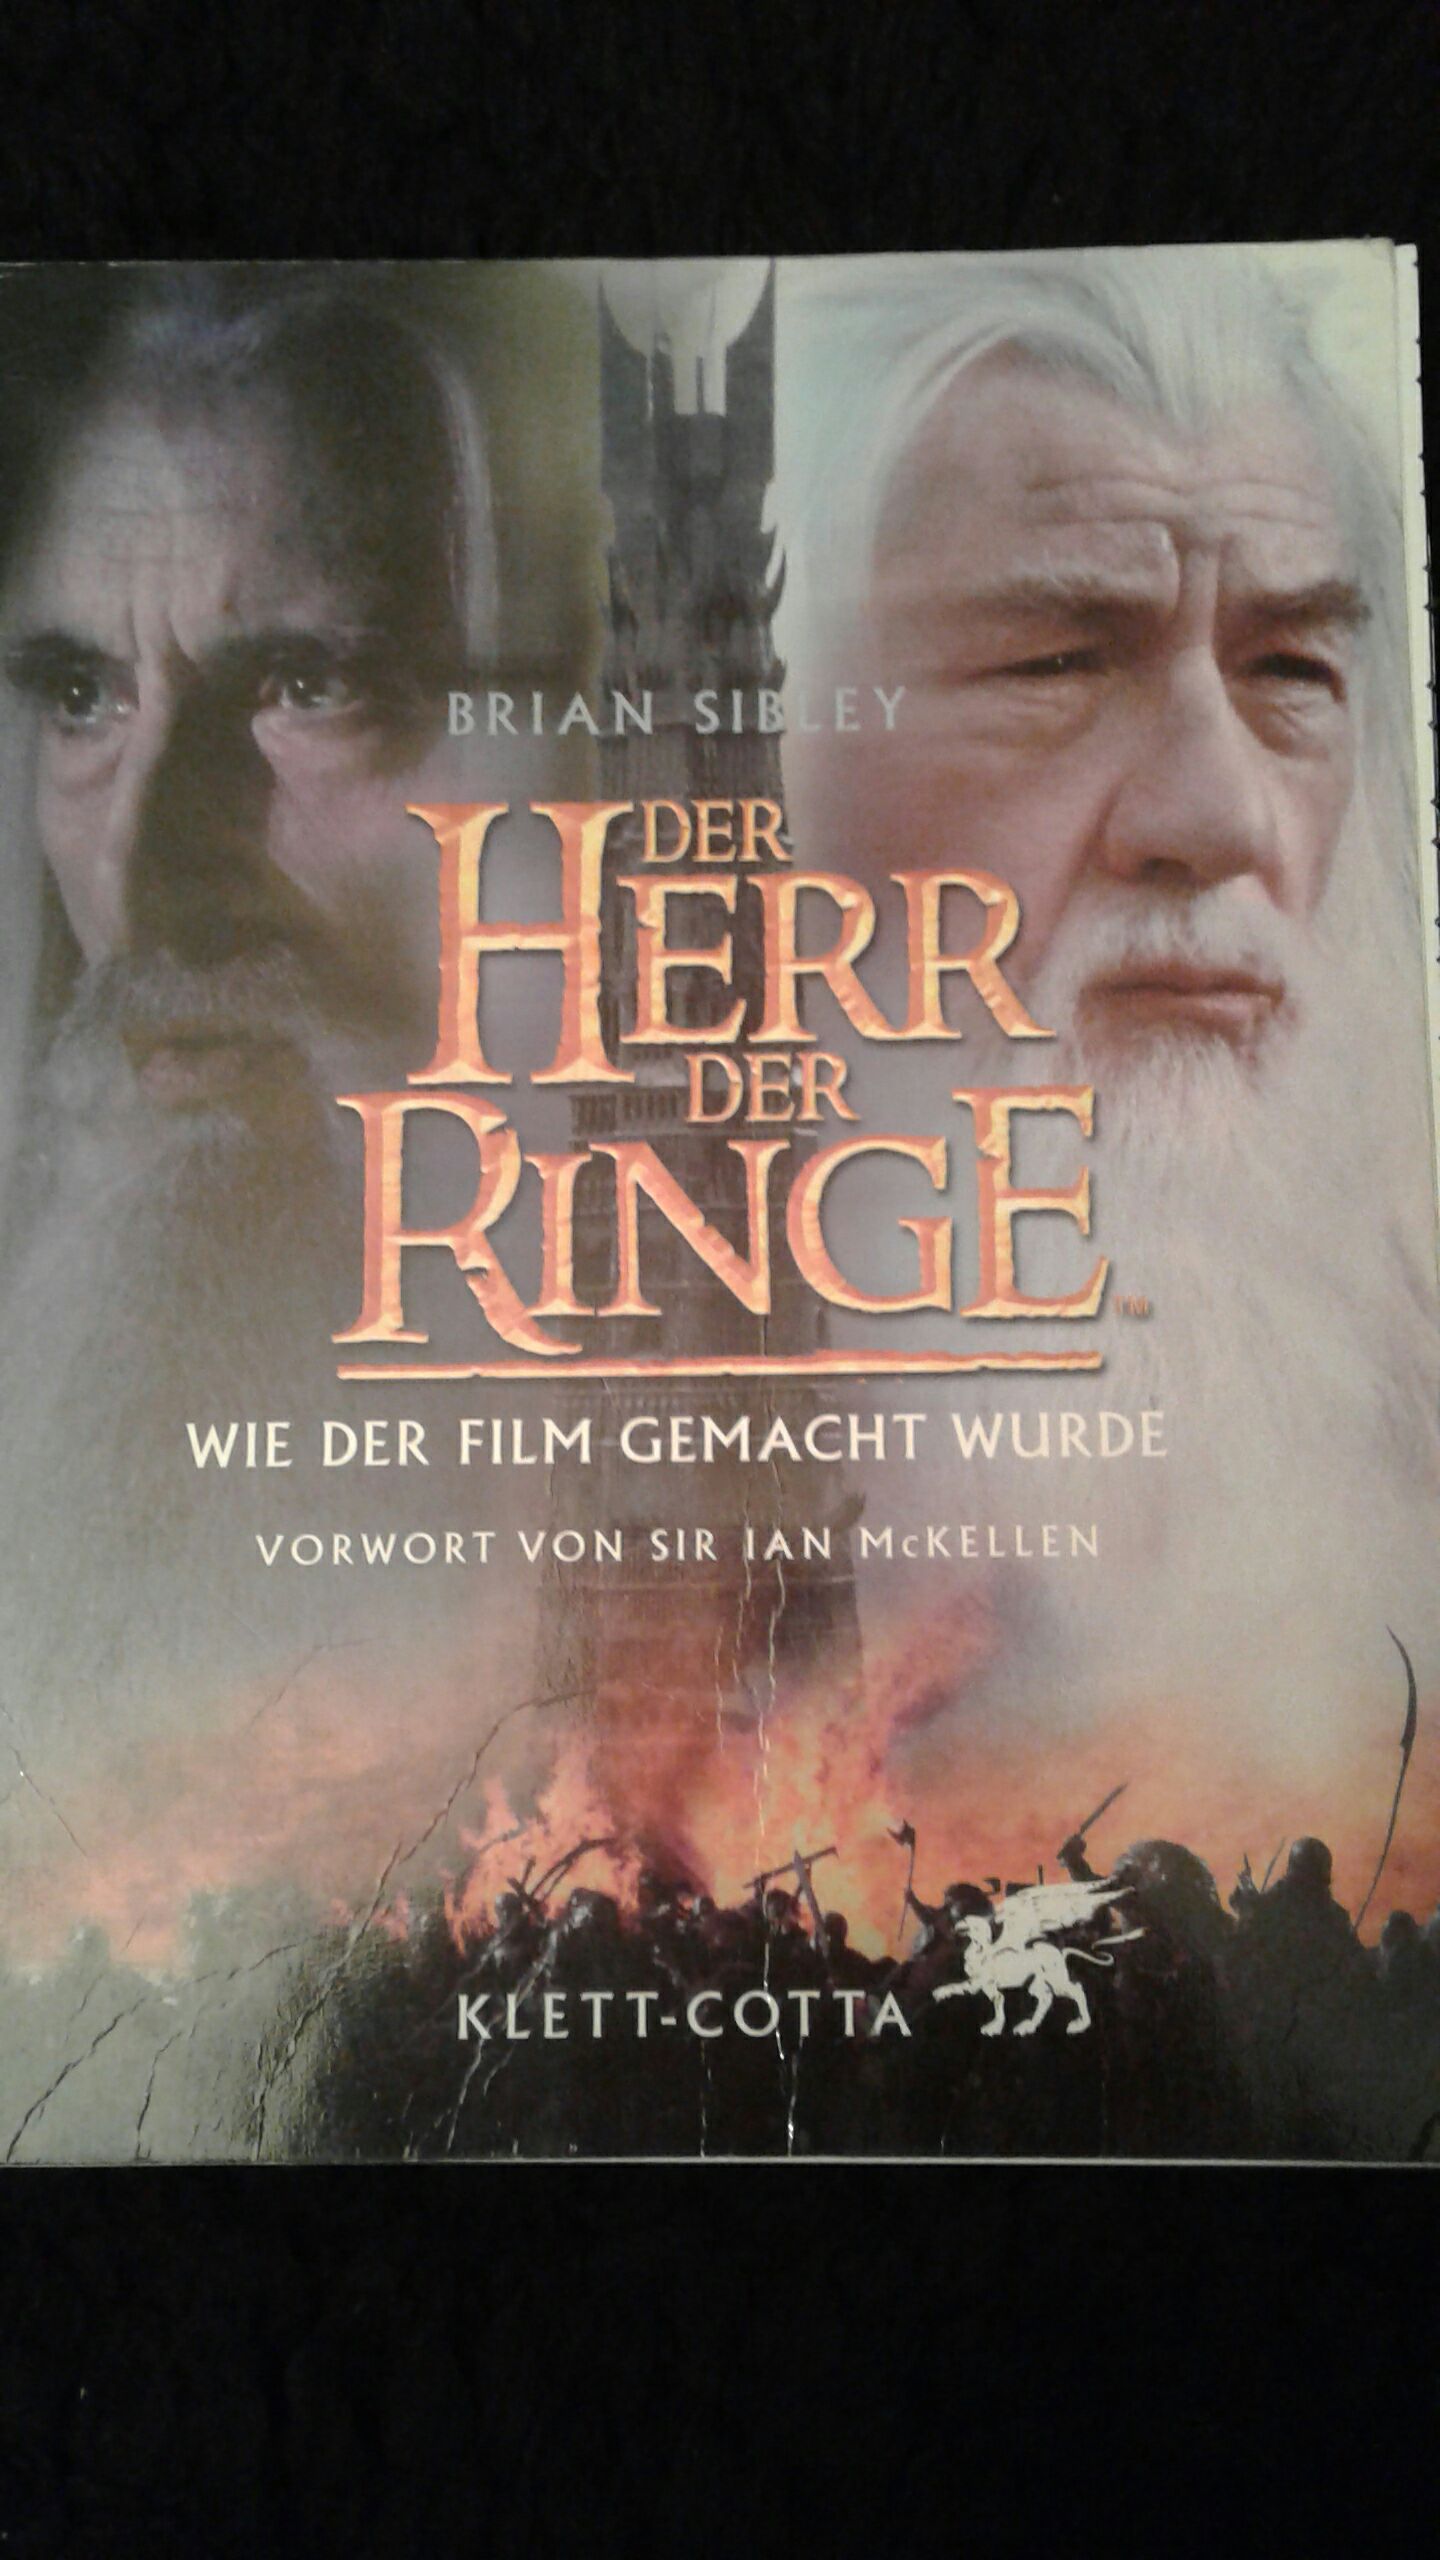 Der Herr der Ringe - Brian Sibley (Paperback) book collectible [Barcode 9783608935028] - Main Image 1